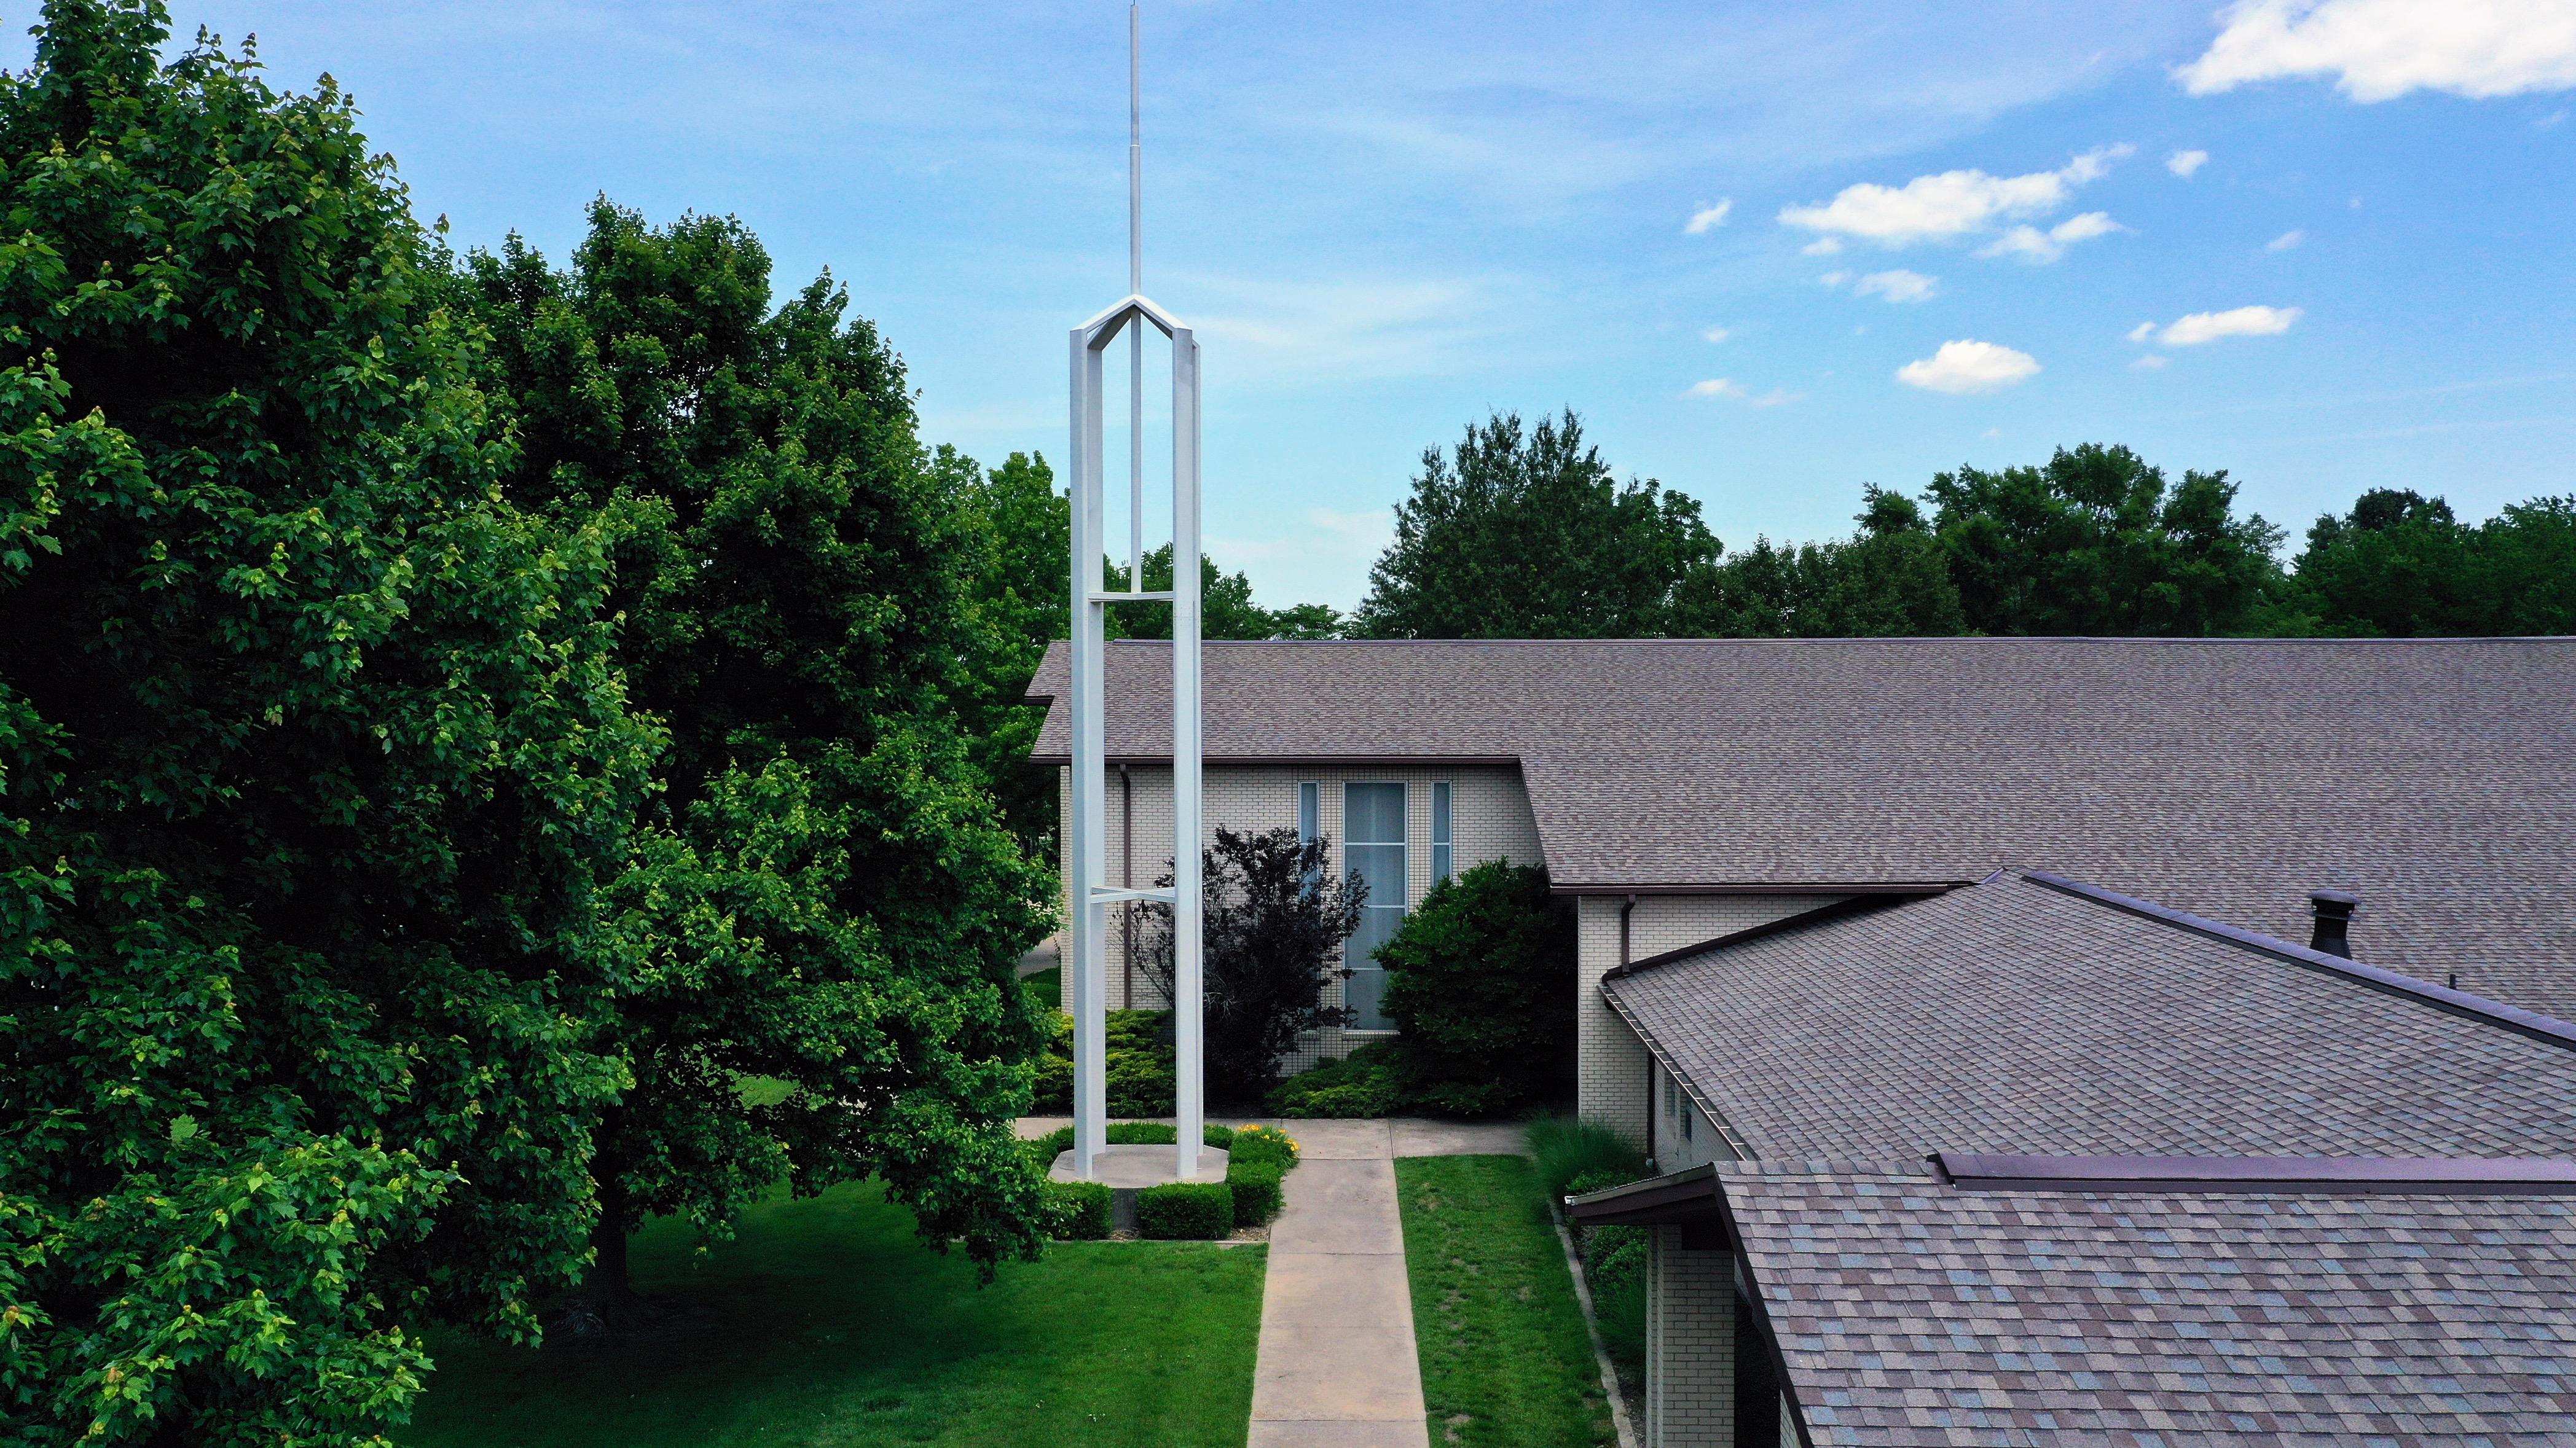 Photo of The Church of Jesus Christ of Latter-day Saints located in Monett, Missouri exterior.